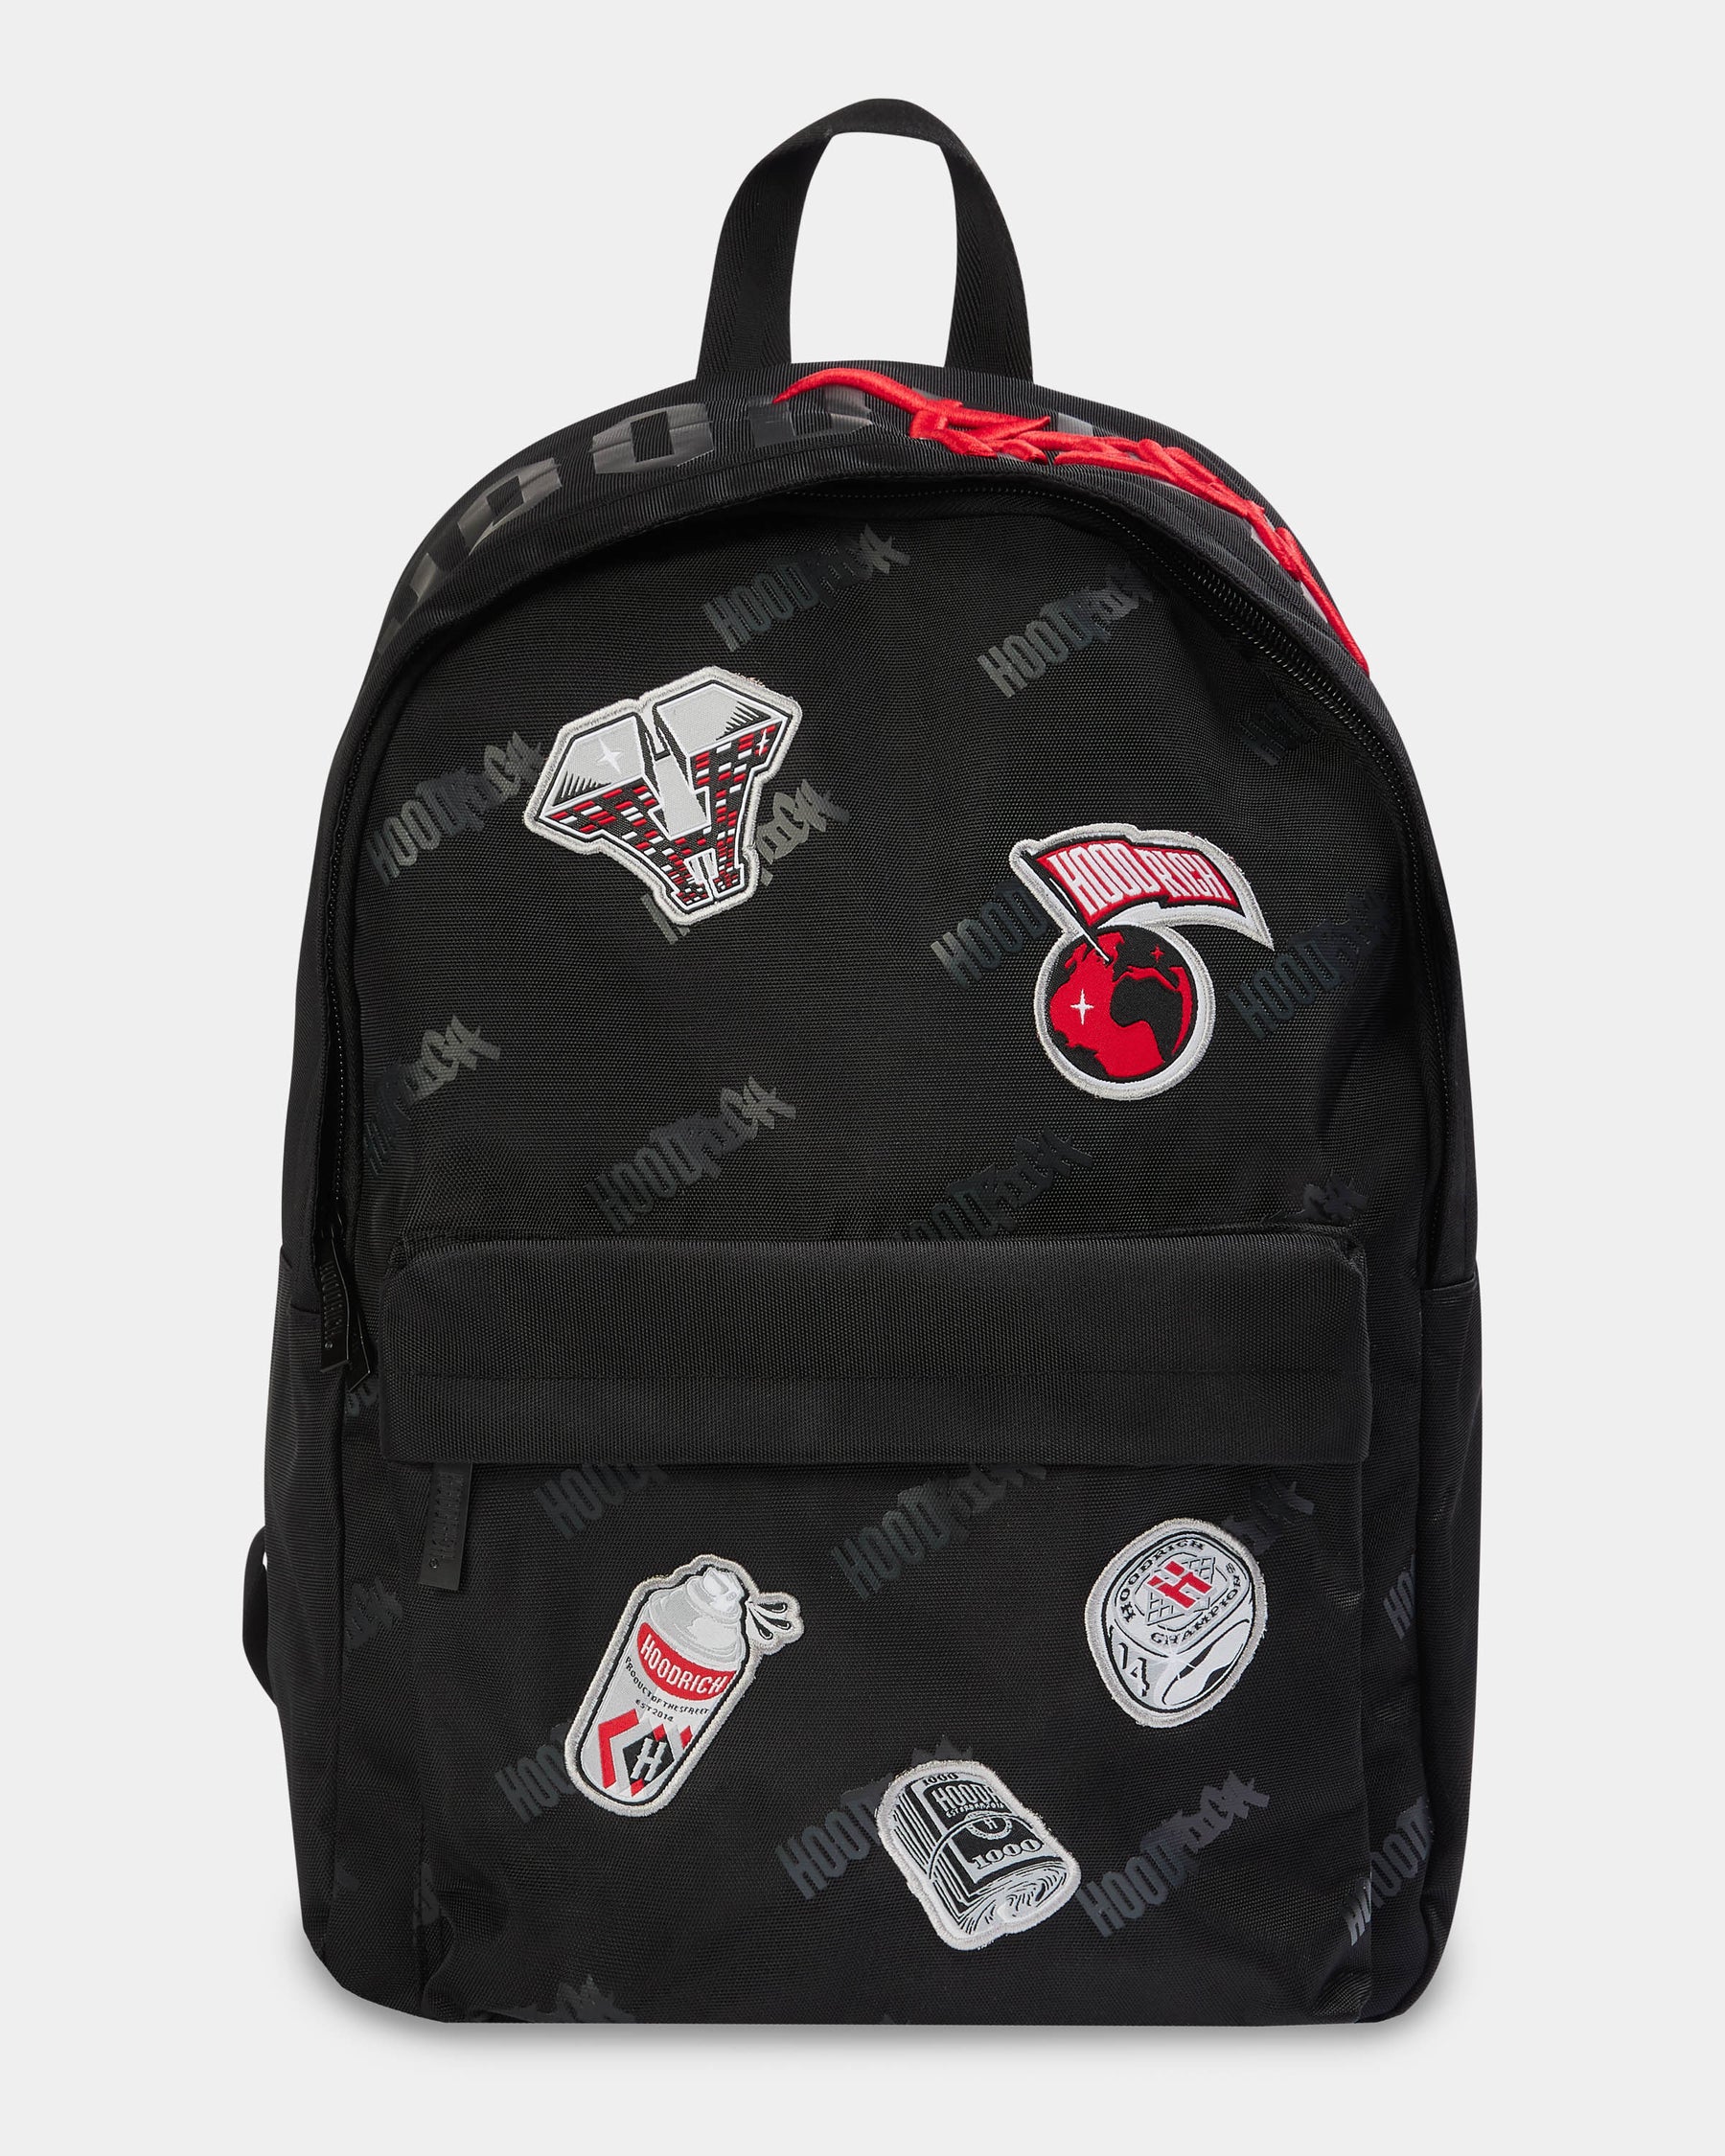 Honor Backpack - Black/Red/White